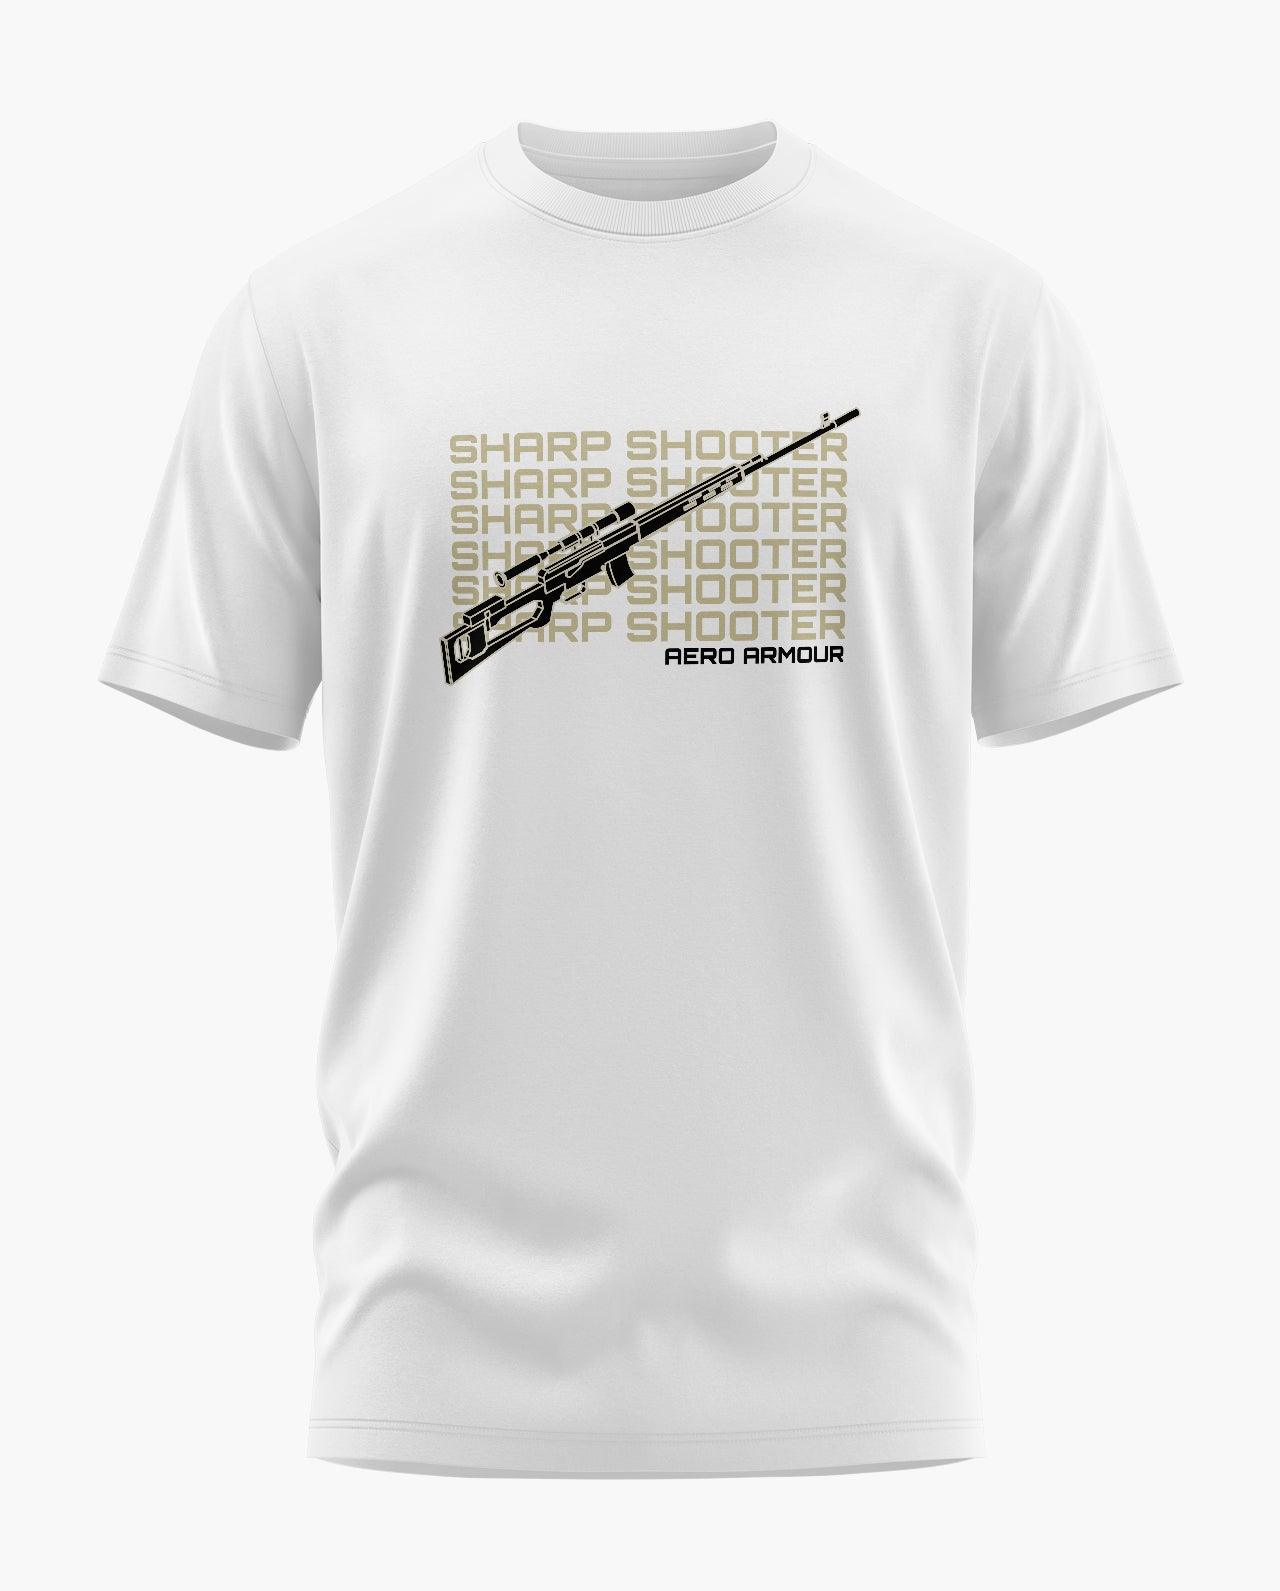 Sharpshooter T-Shirt - Aero Armour